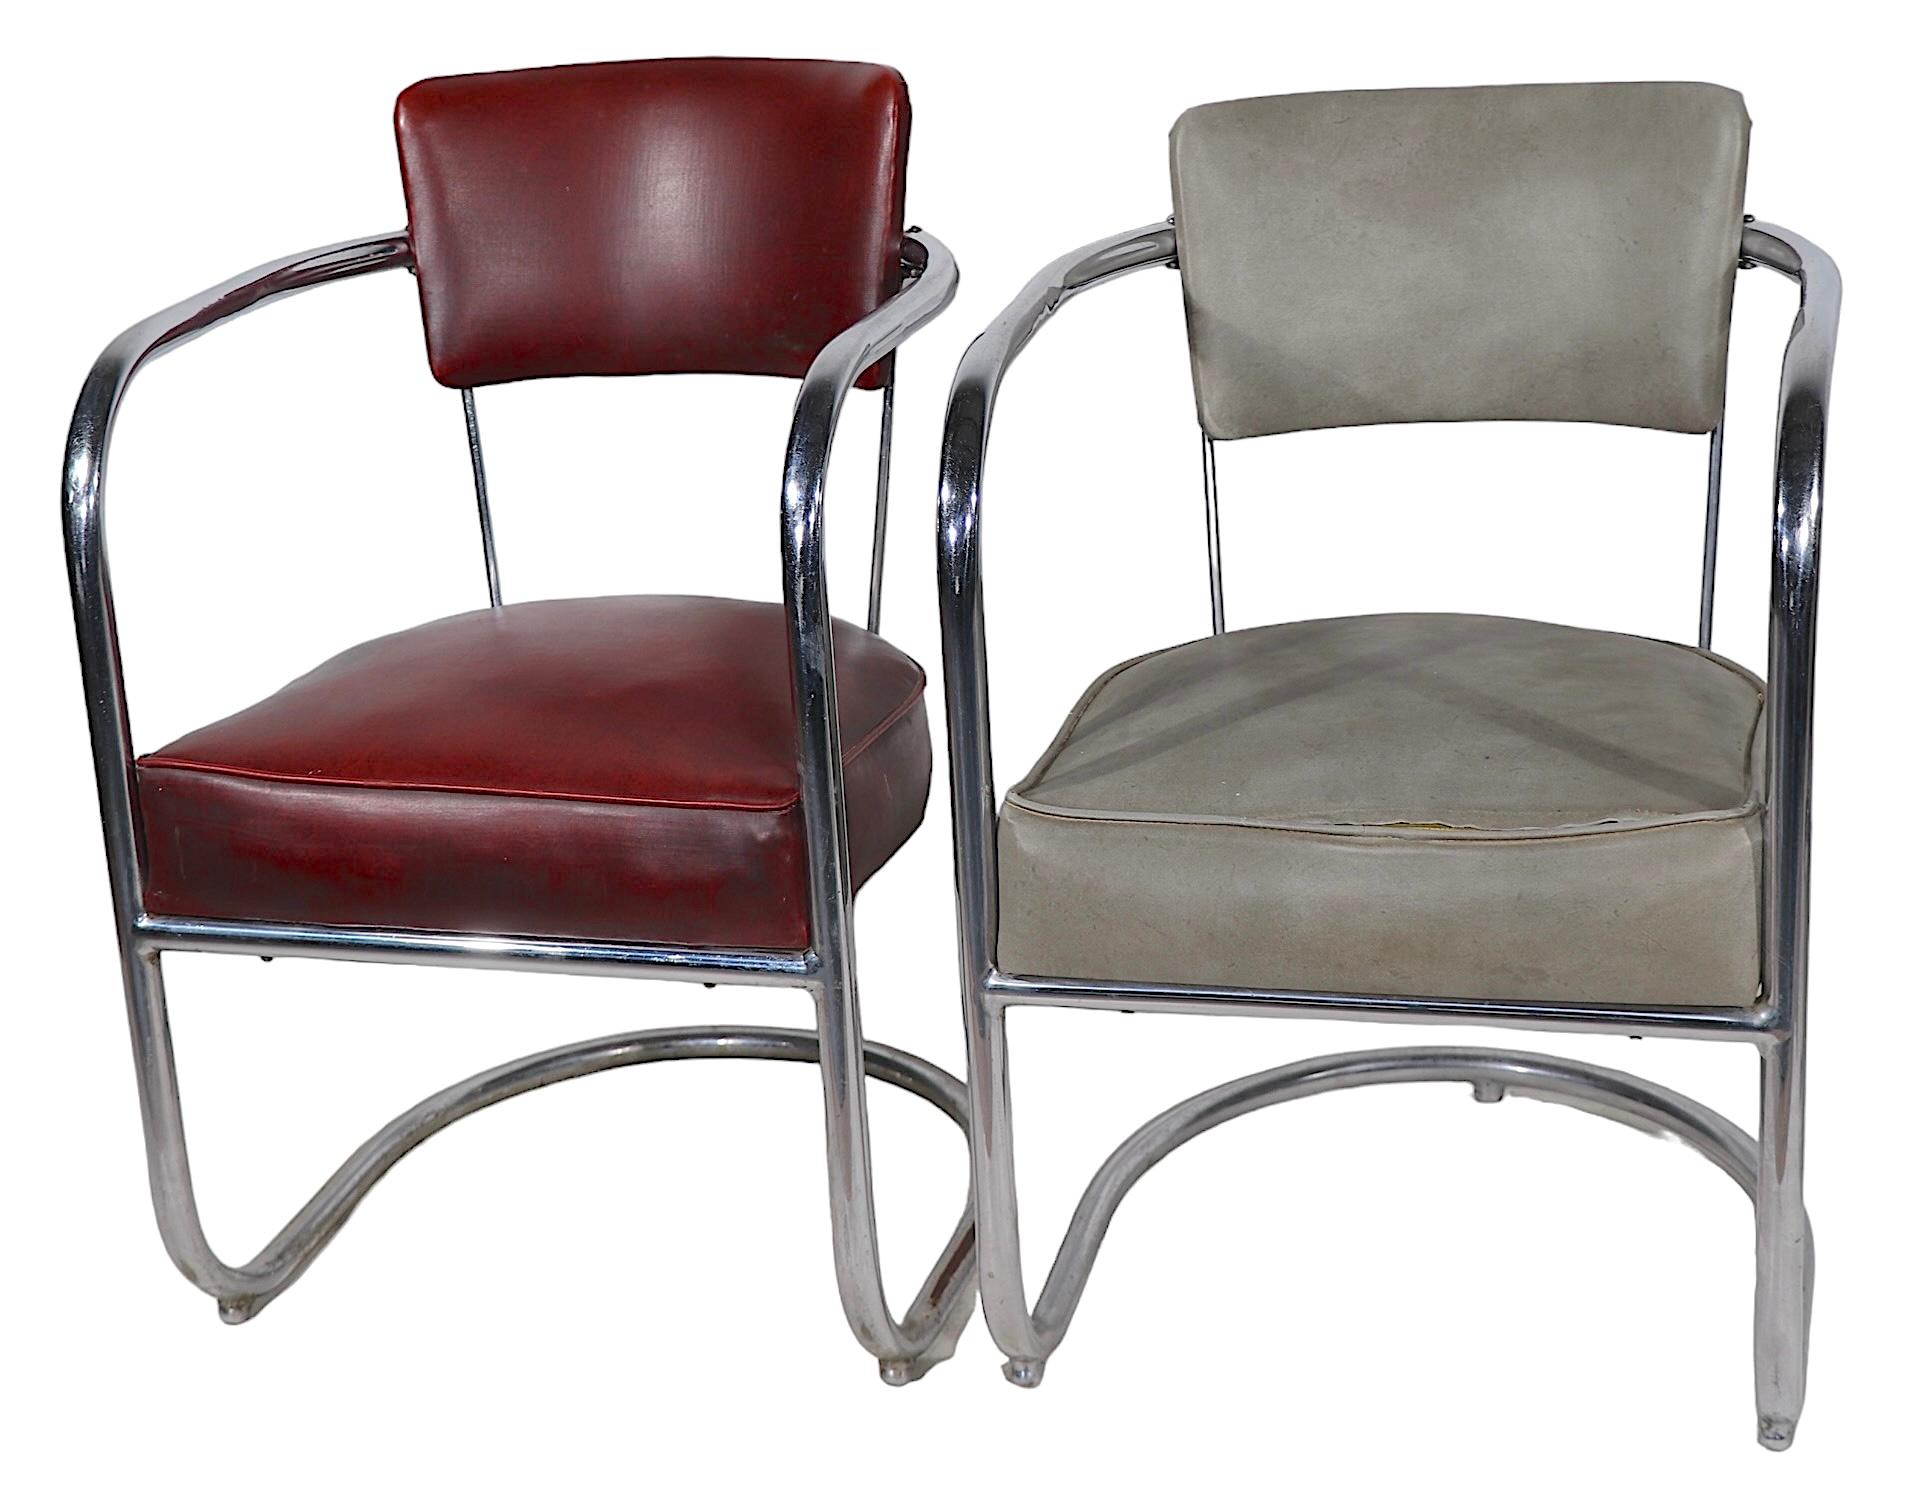 4 Chrome Art Deco Arm Chairs by Lloyd Furniture att. to Kem Weber c.1930's For Sale 7